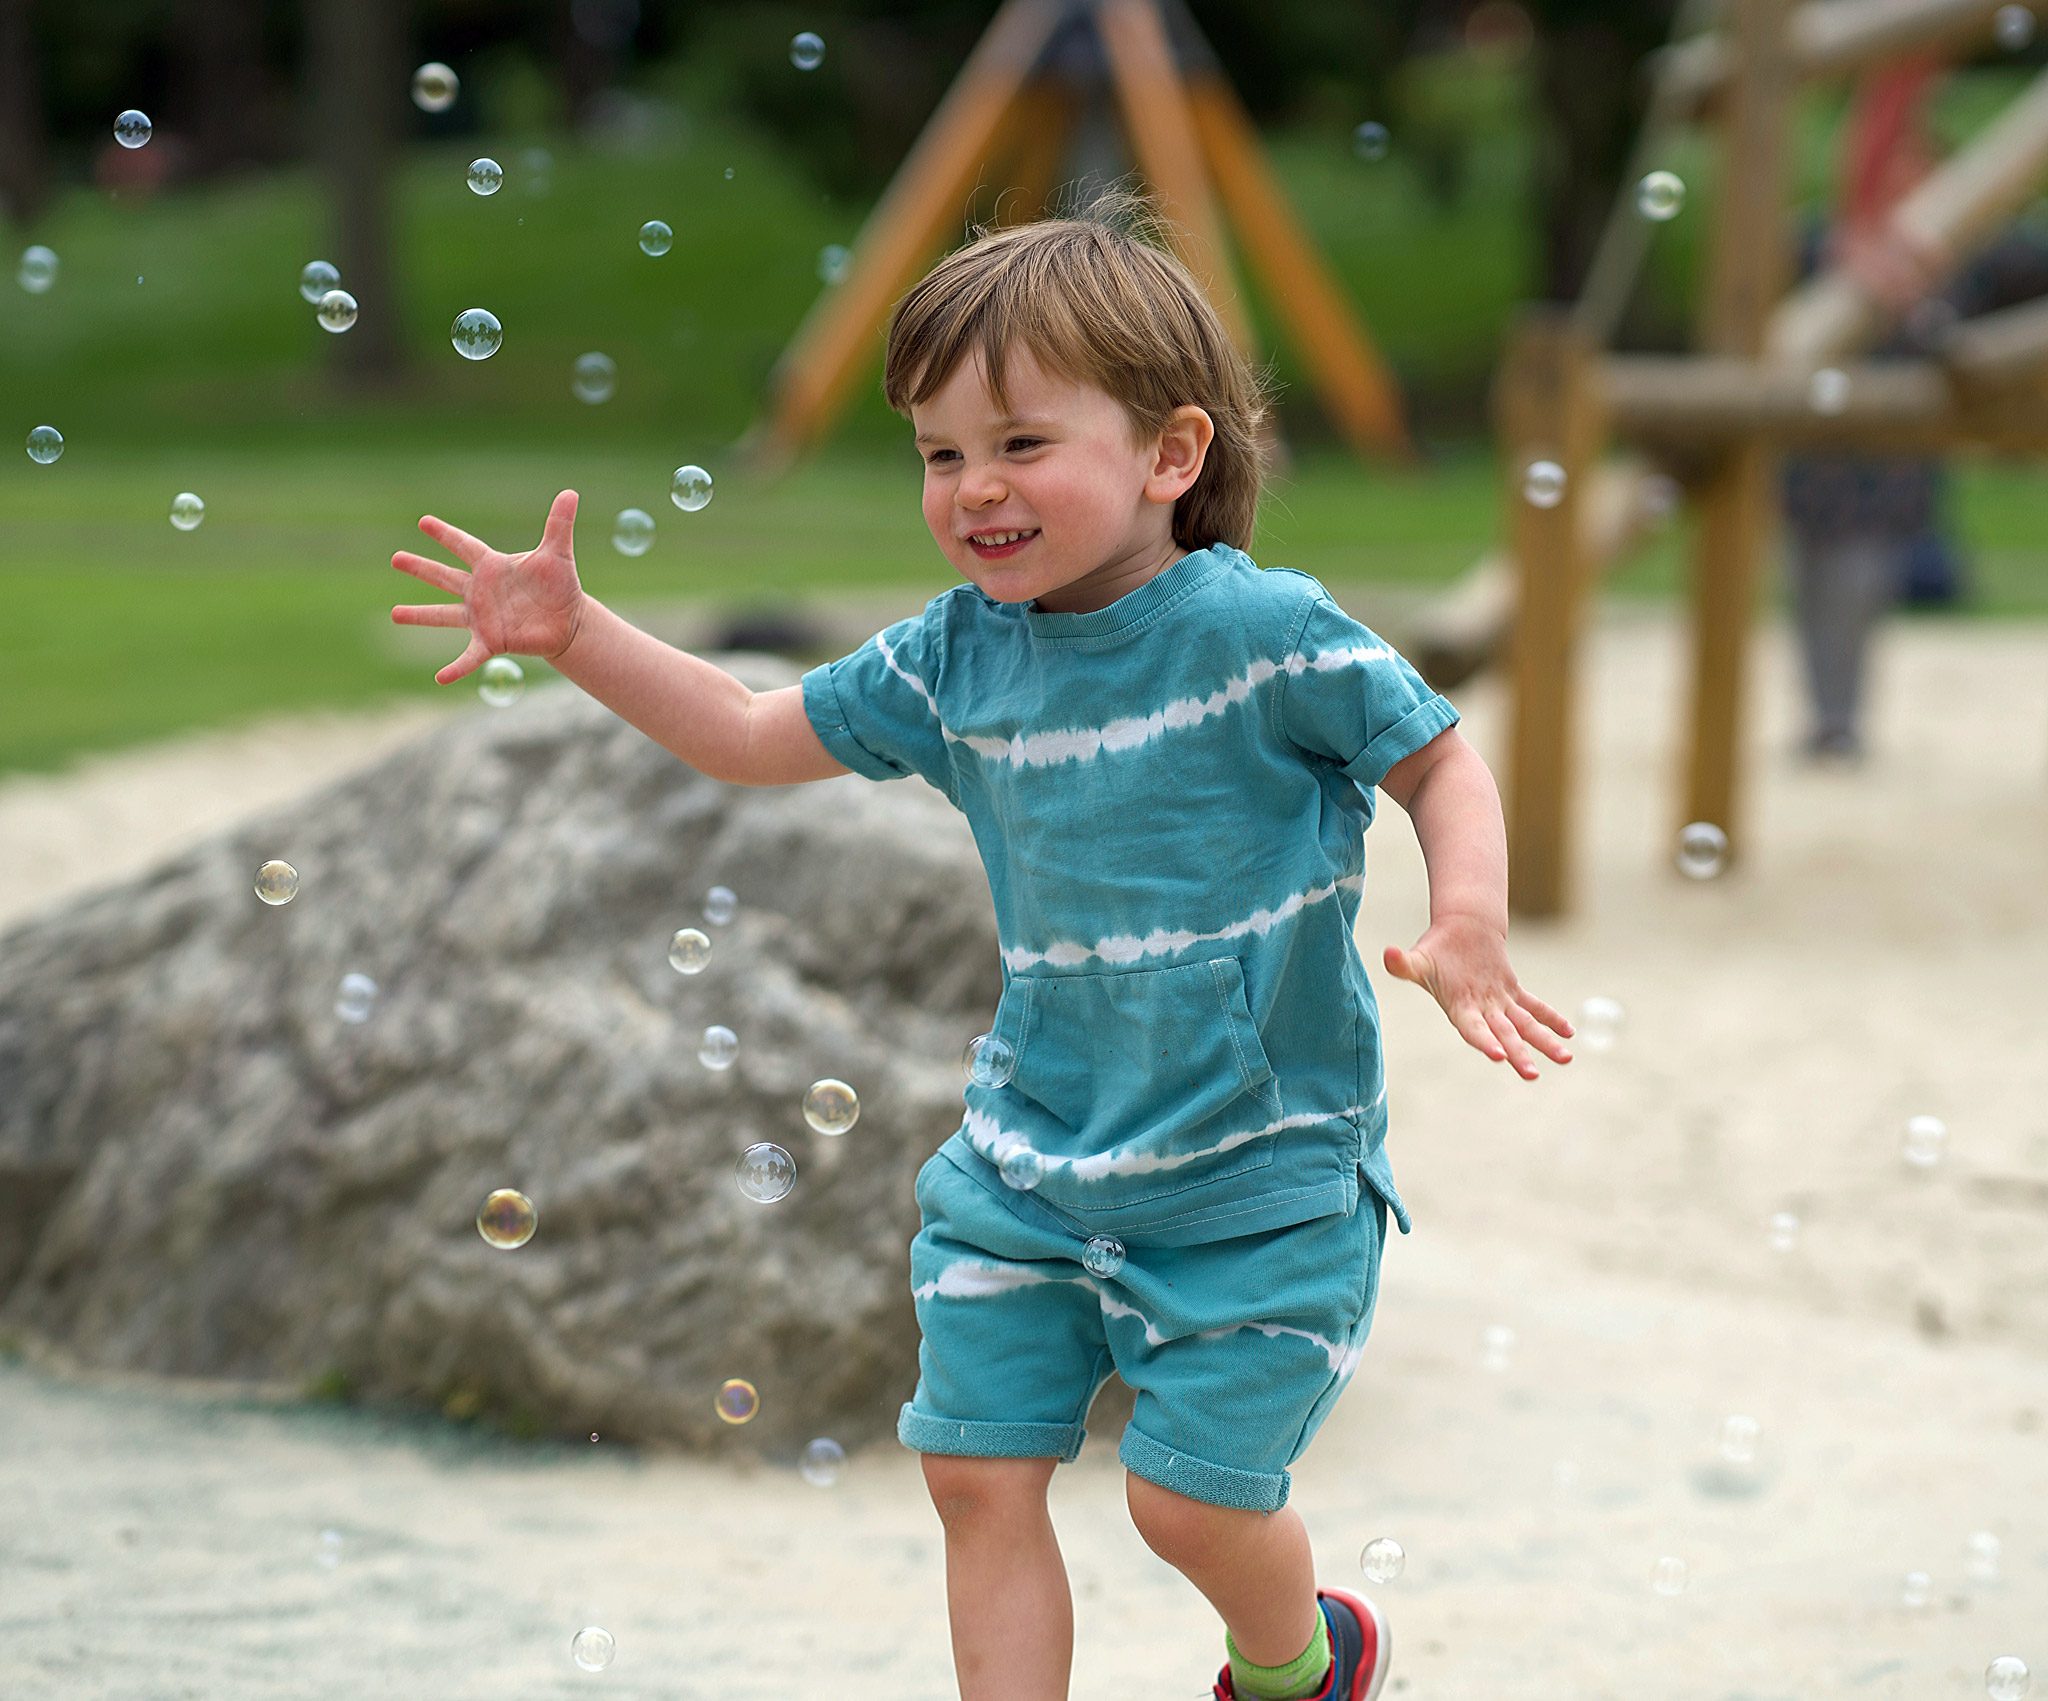 Playground-bubbles-2.jpg